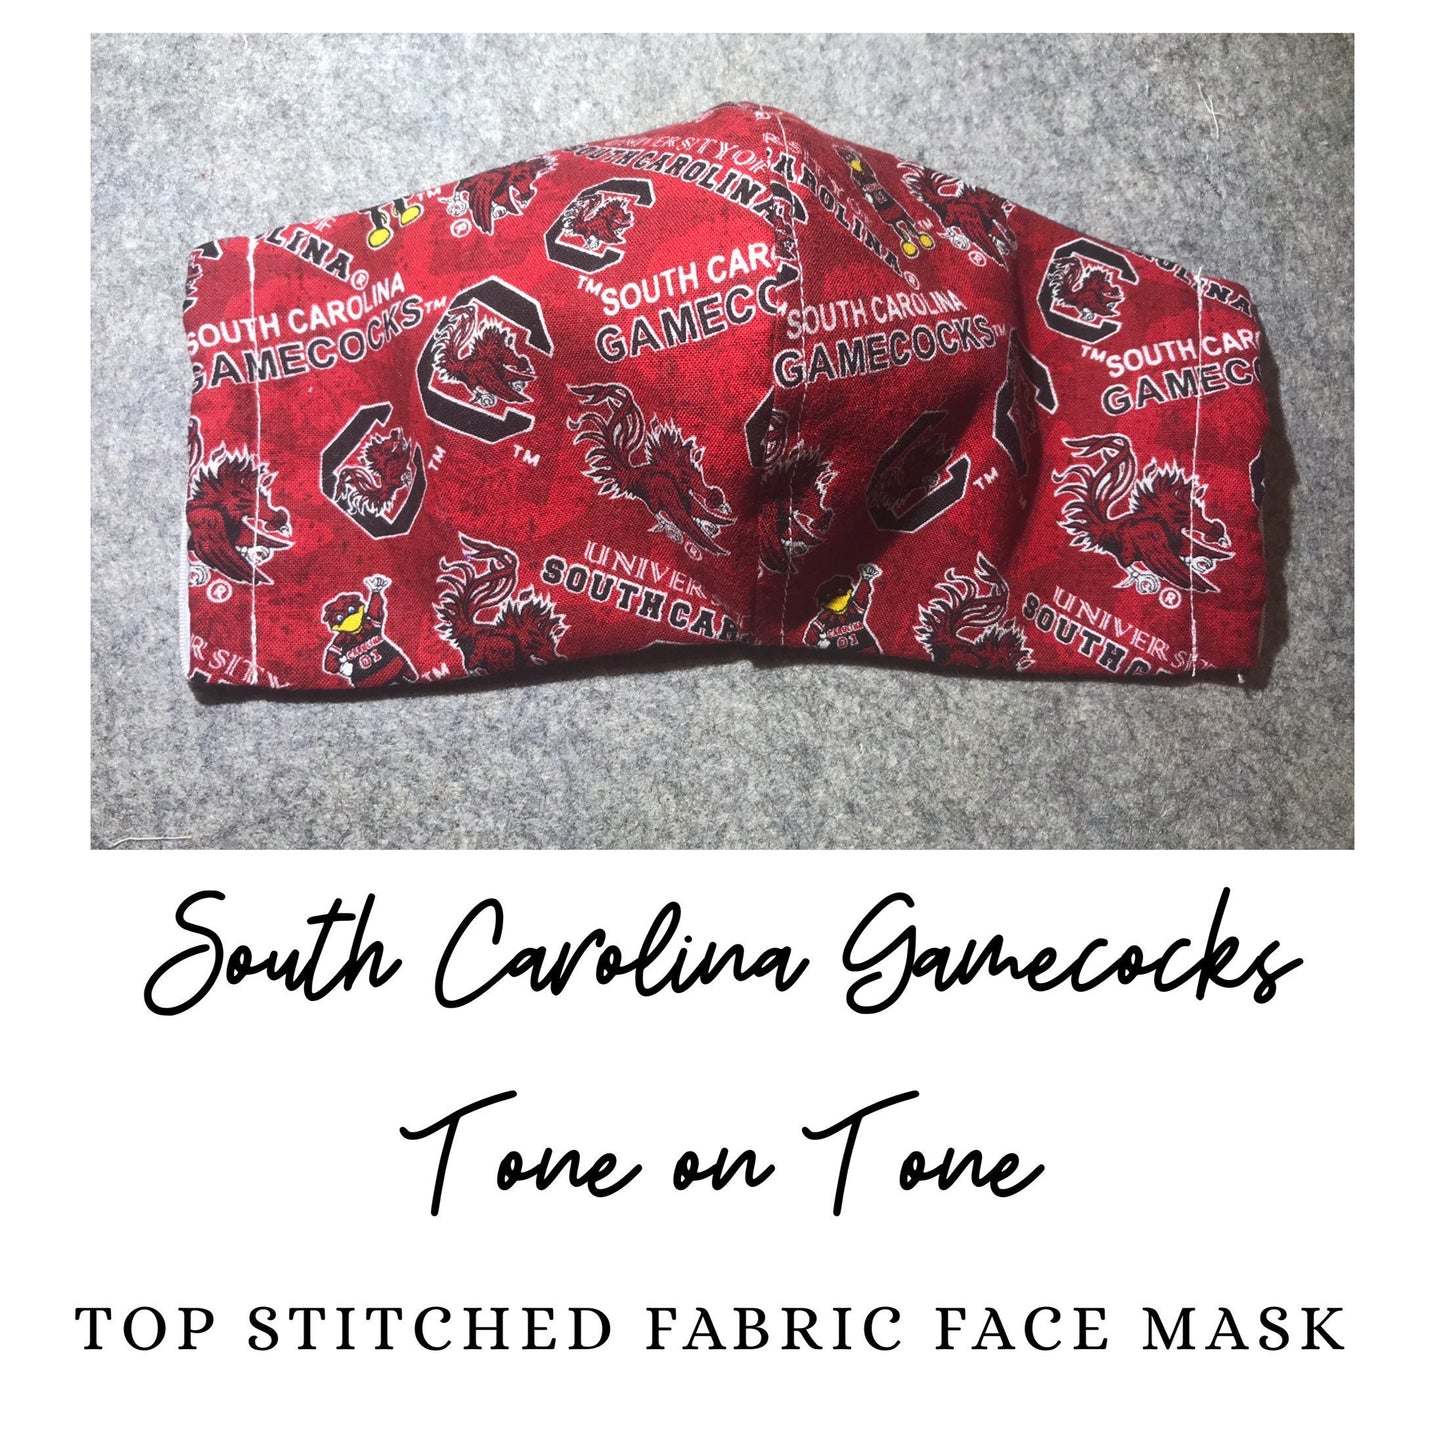 South Carolina Gamecocks Tone on Tone Inspired Fabric Face Mask with filter pocket